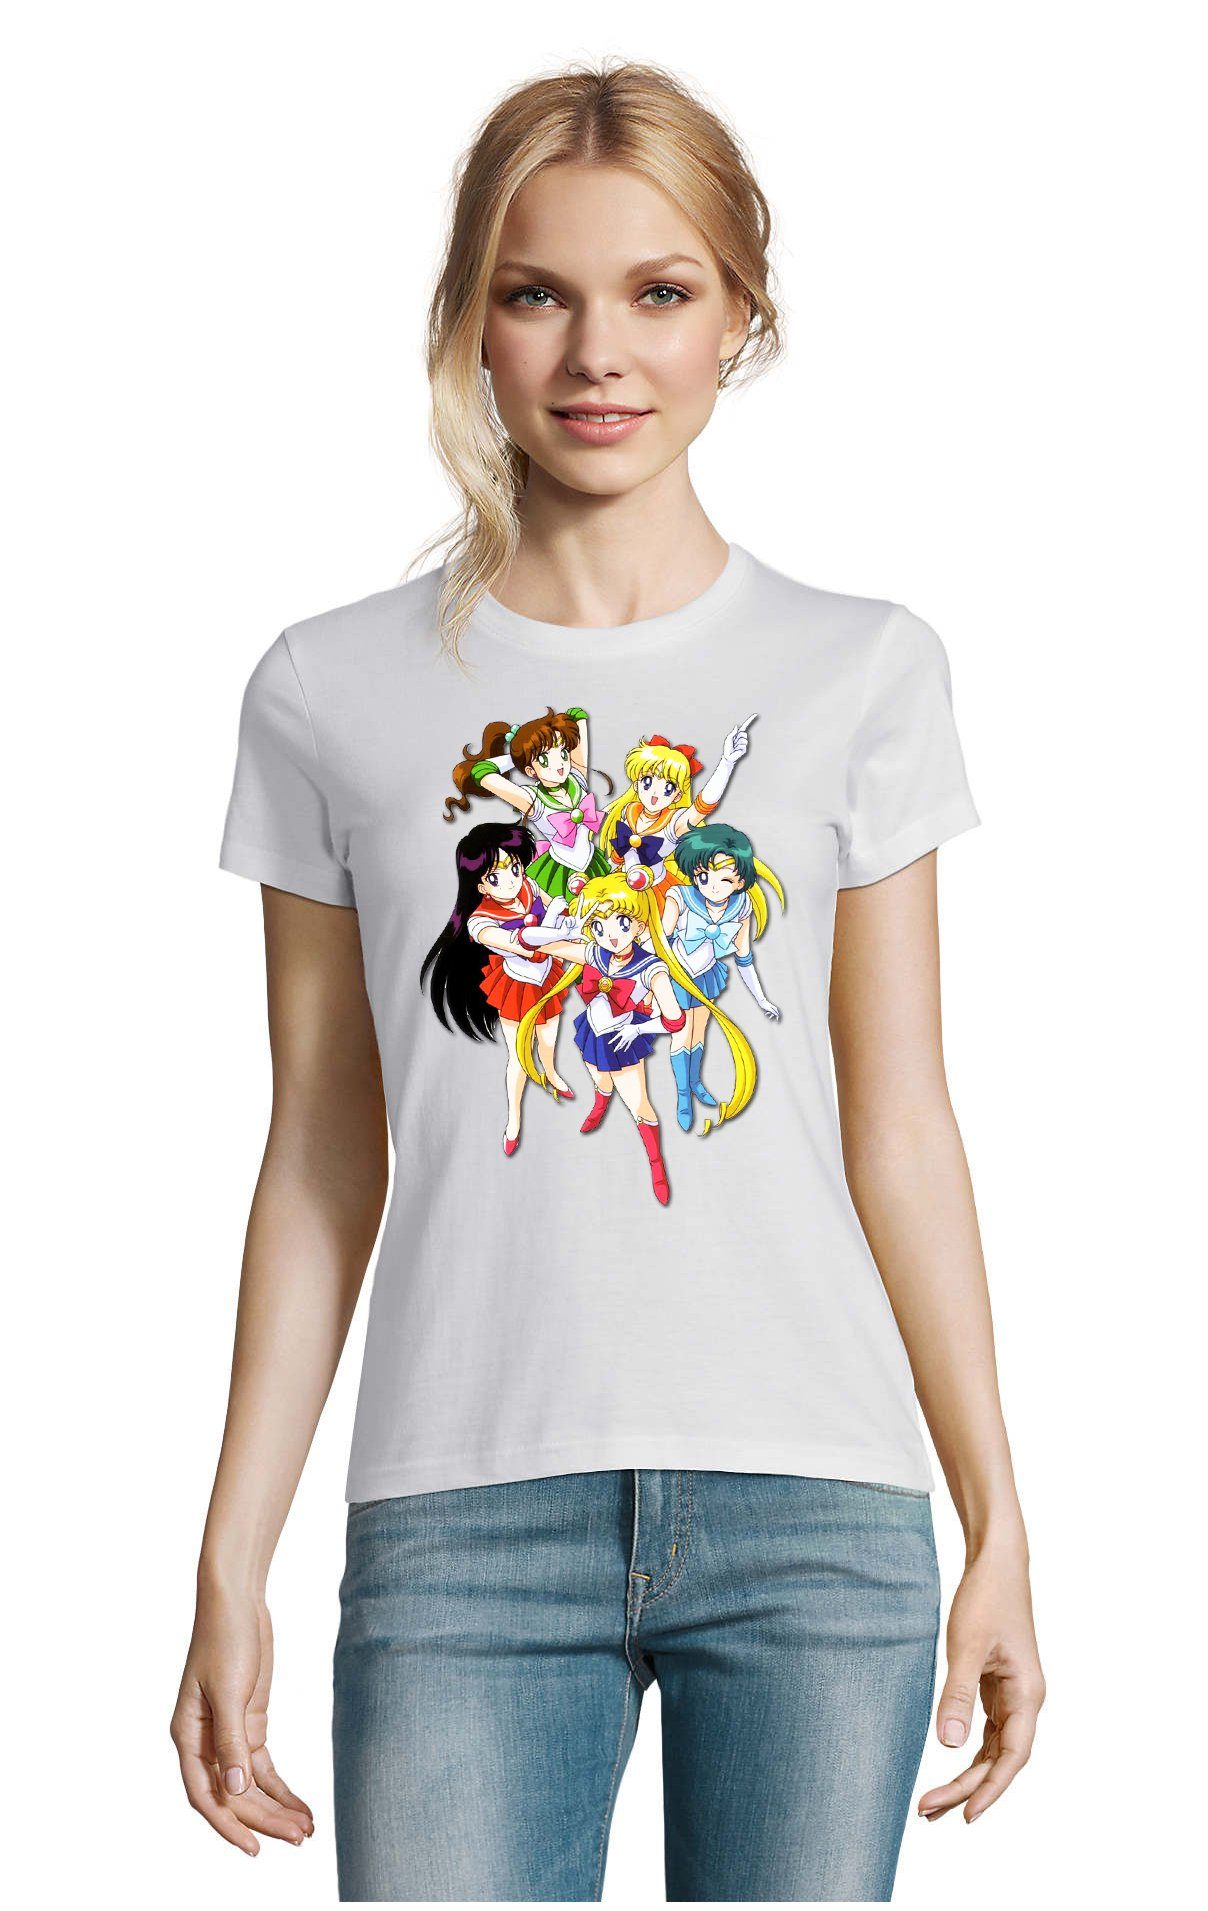 Blondie & Brownie T-Shirt Damen Fun Comic Sailor Moon and Friends Anime Manga Weiß | T-Shirts